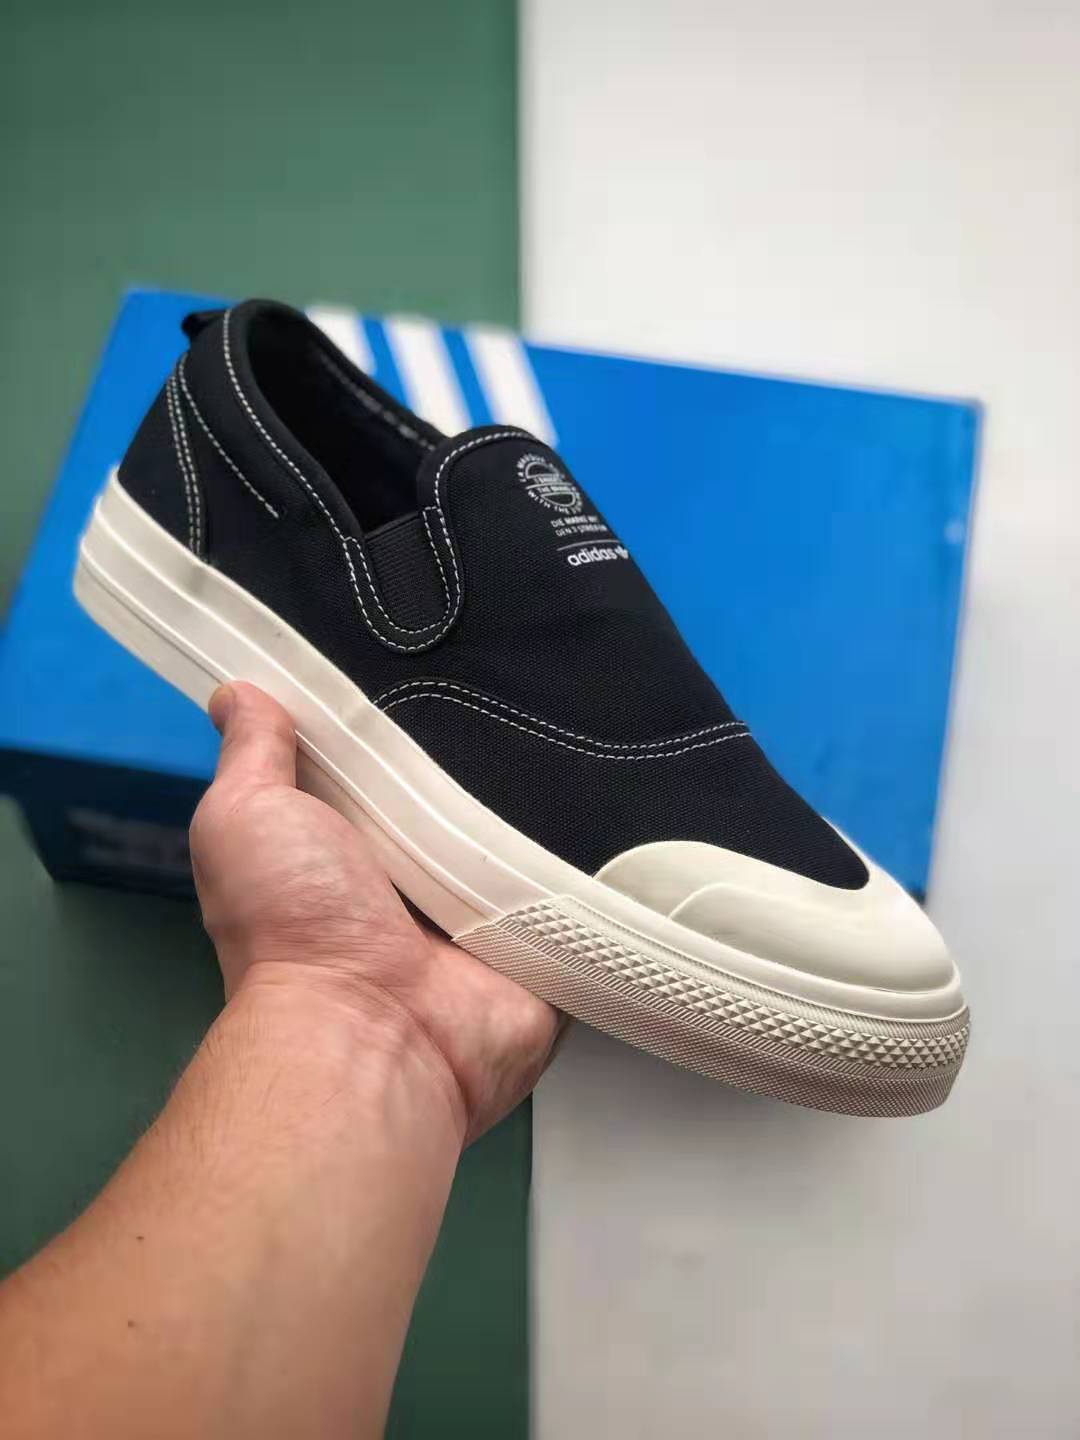 Adidas Nizza RF Slip-On Black White EF1411 - Stylish Slip-On Sneakers